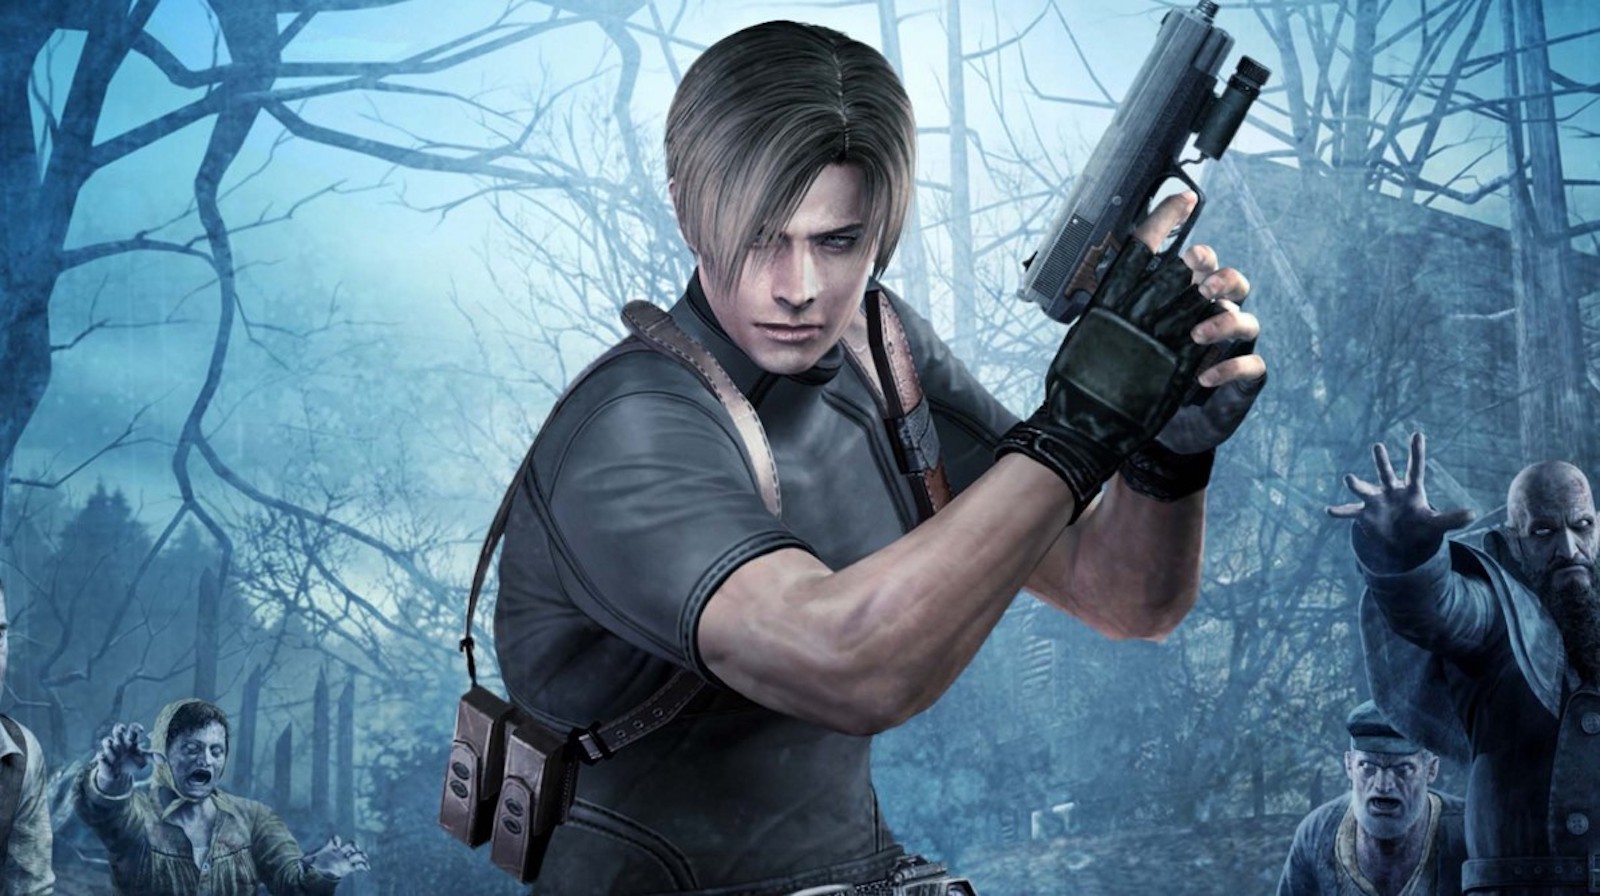  Resident Evil 2 - PlayStation 4 : Capcom U S A Inc